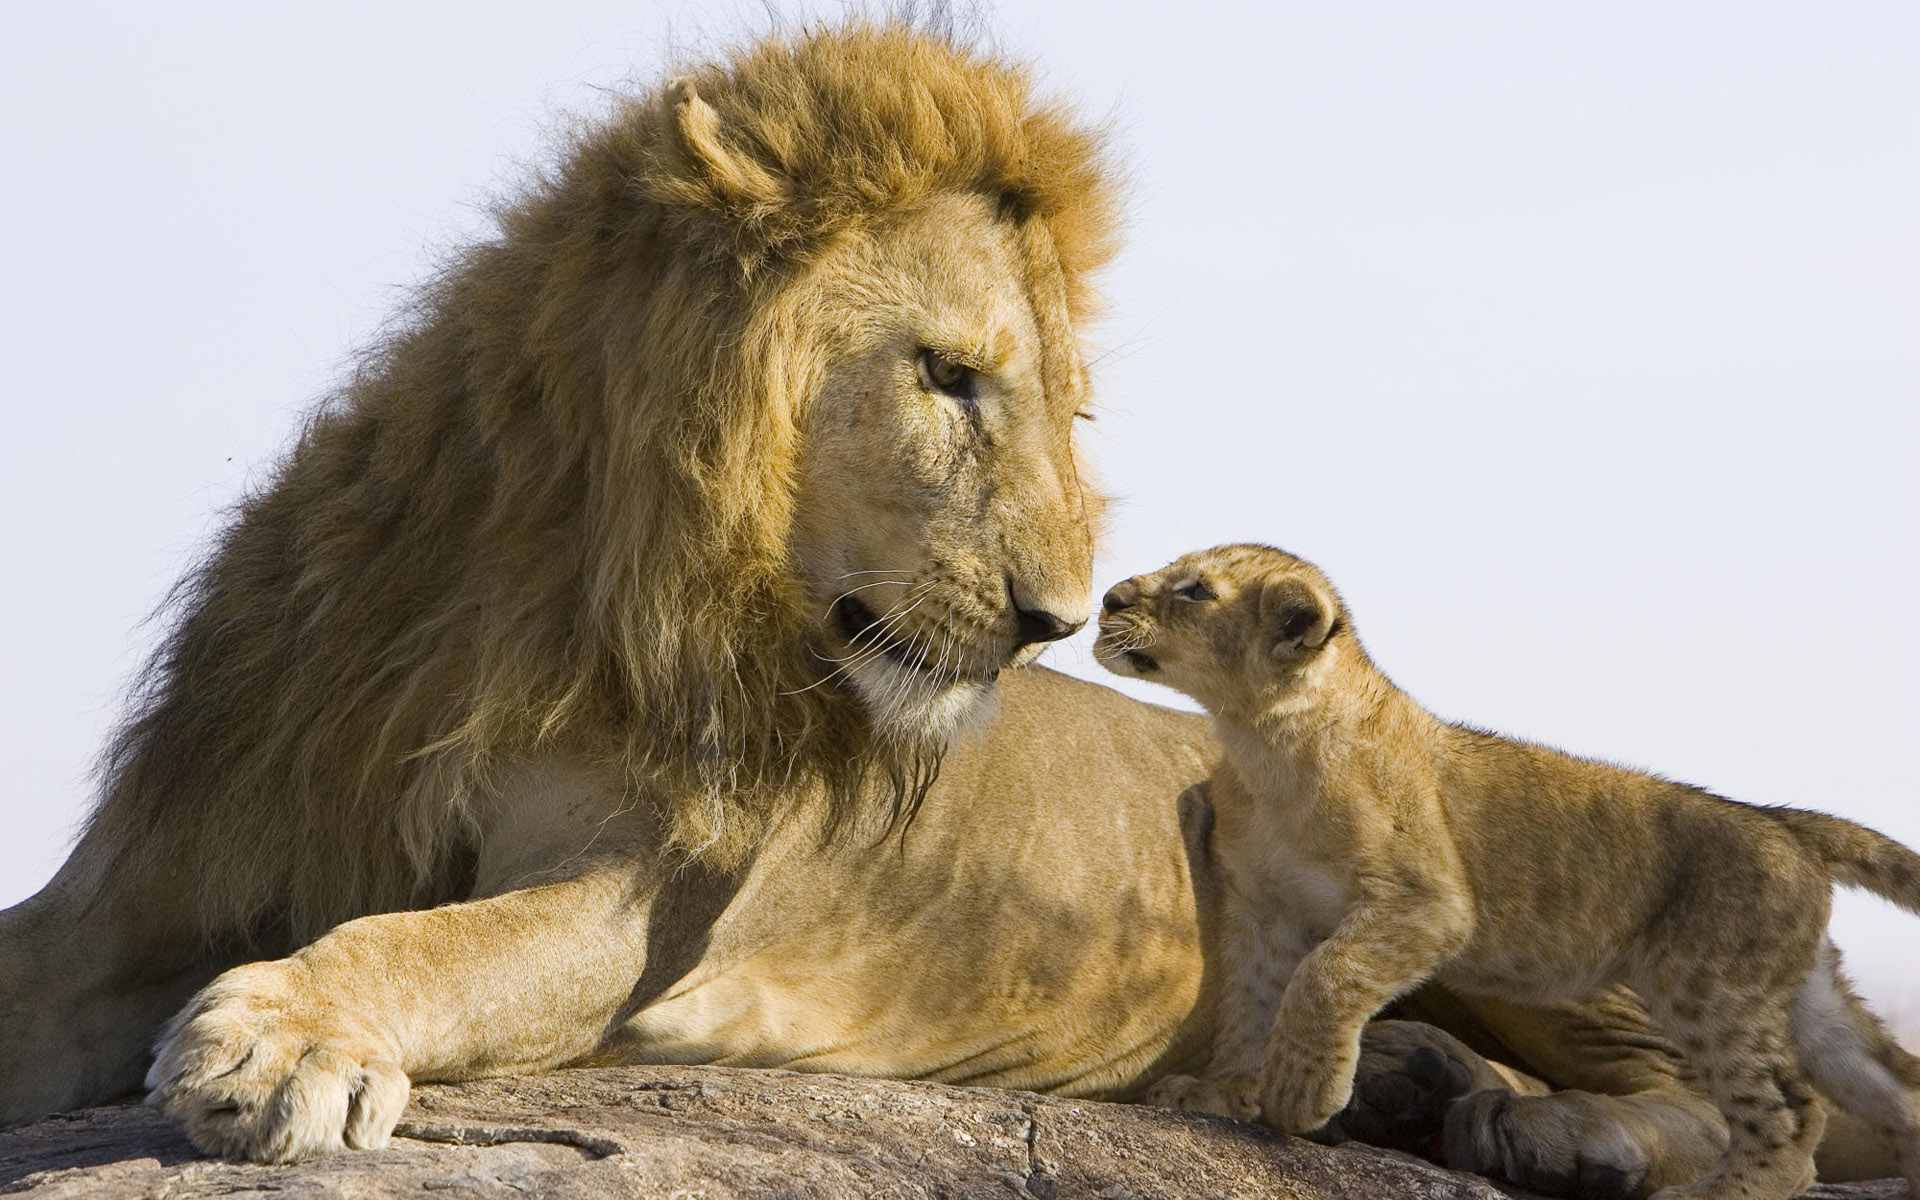 animals, cubs, lions, baby animals - desktop wallpaper